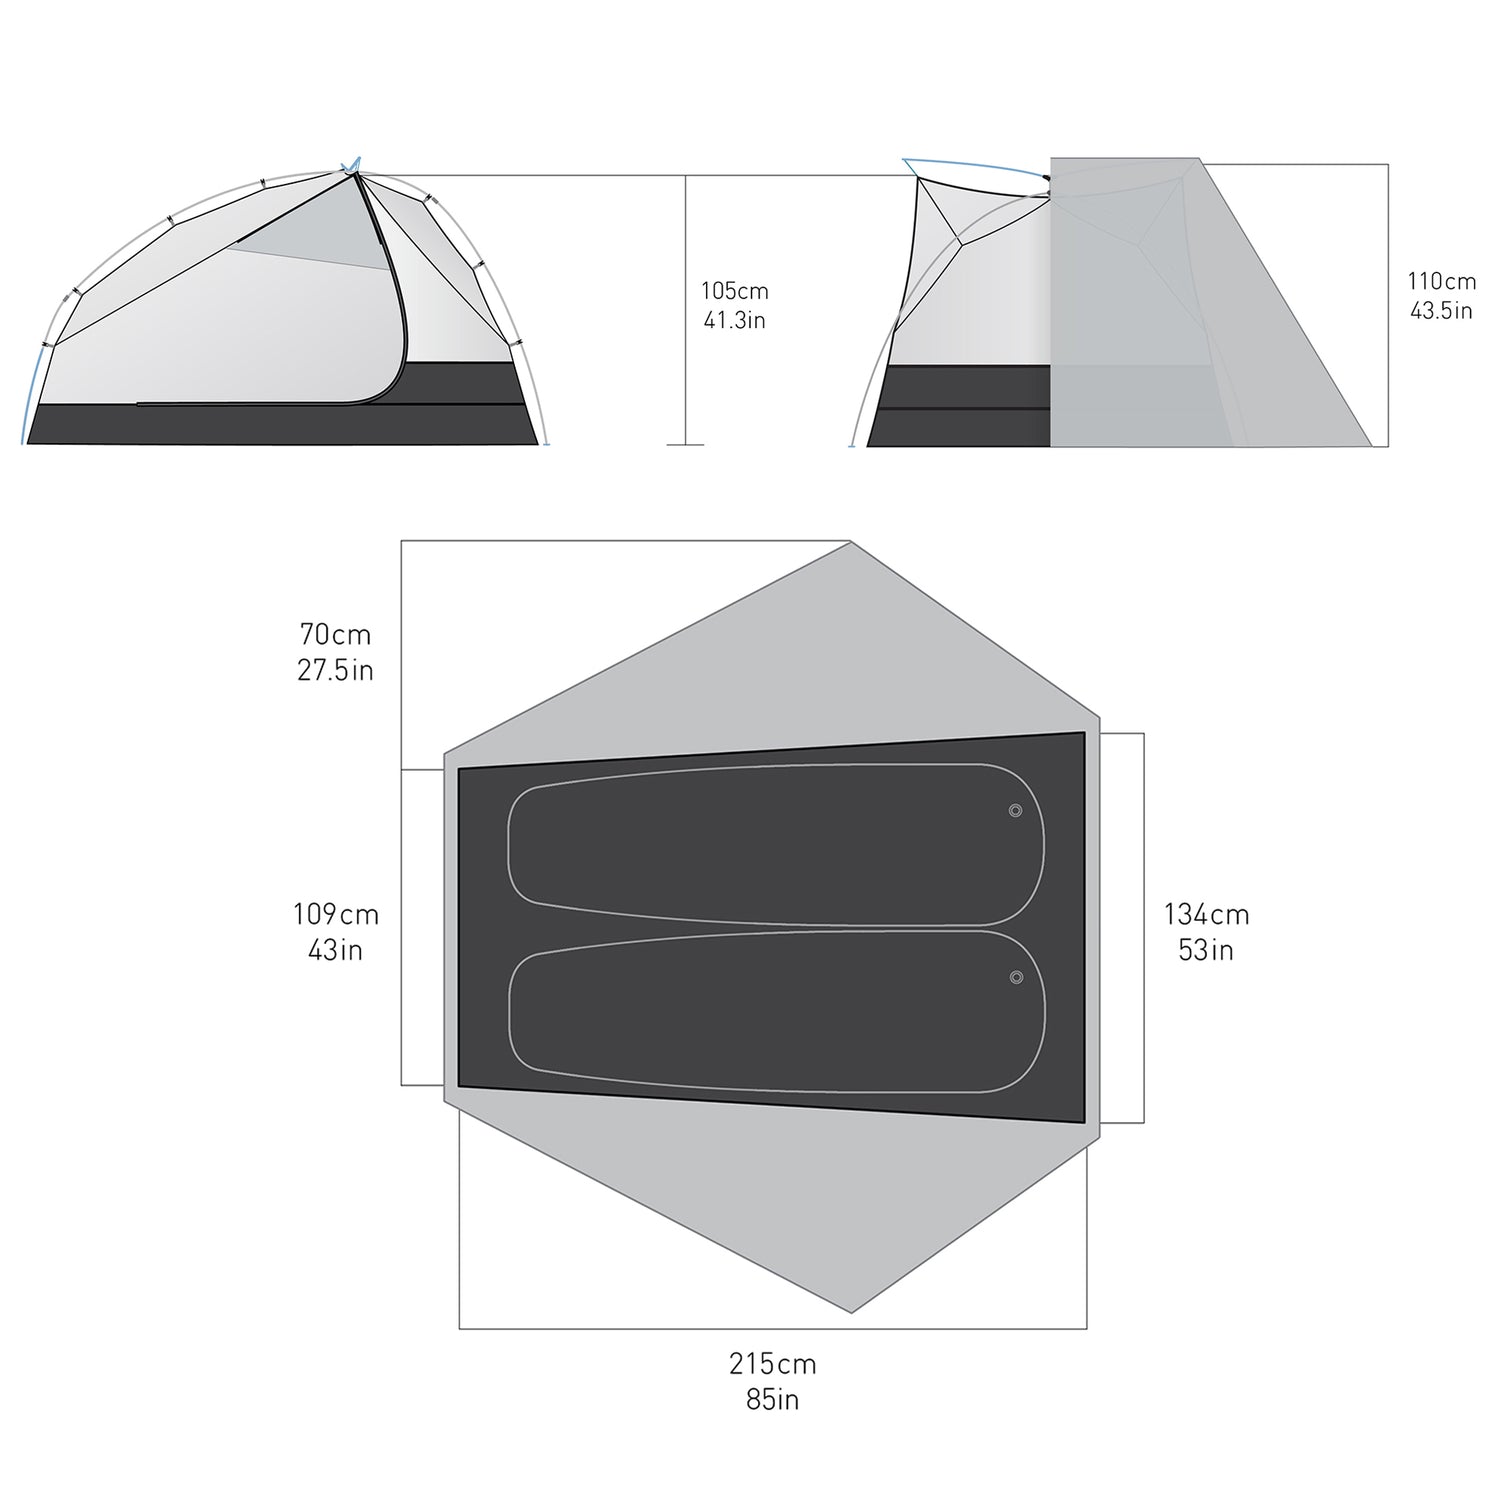 2 Person || Telos Plus Freestanding Ultralight Tent